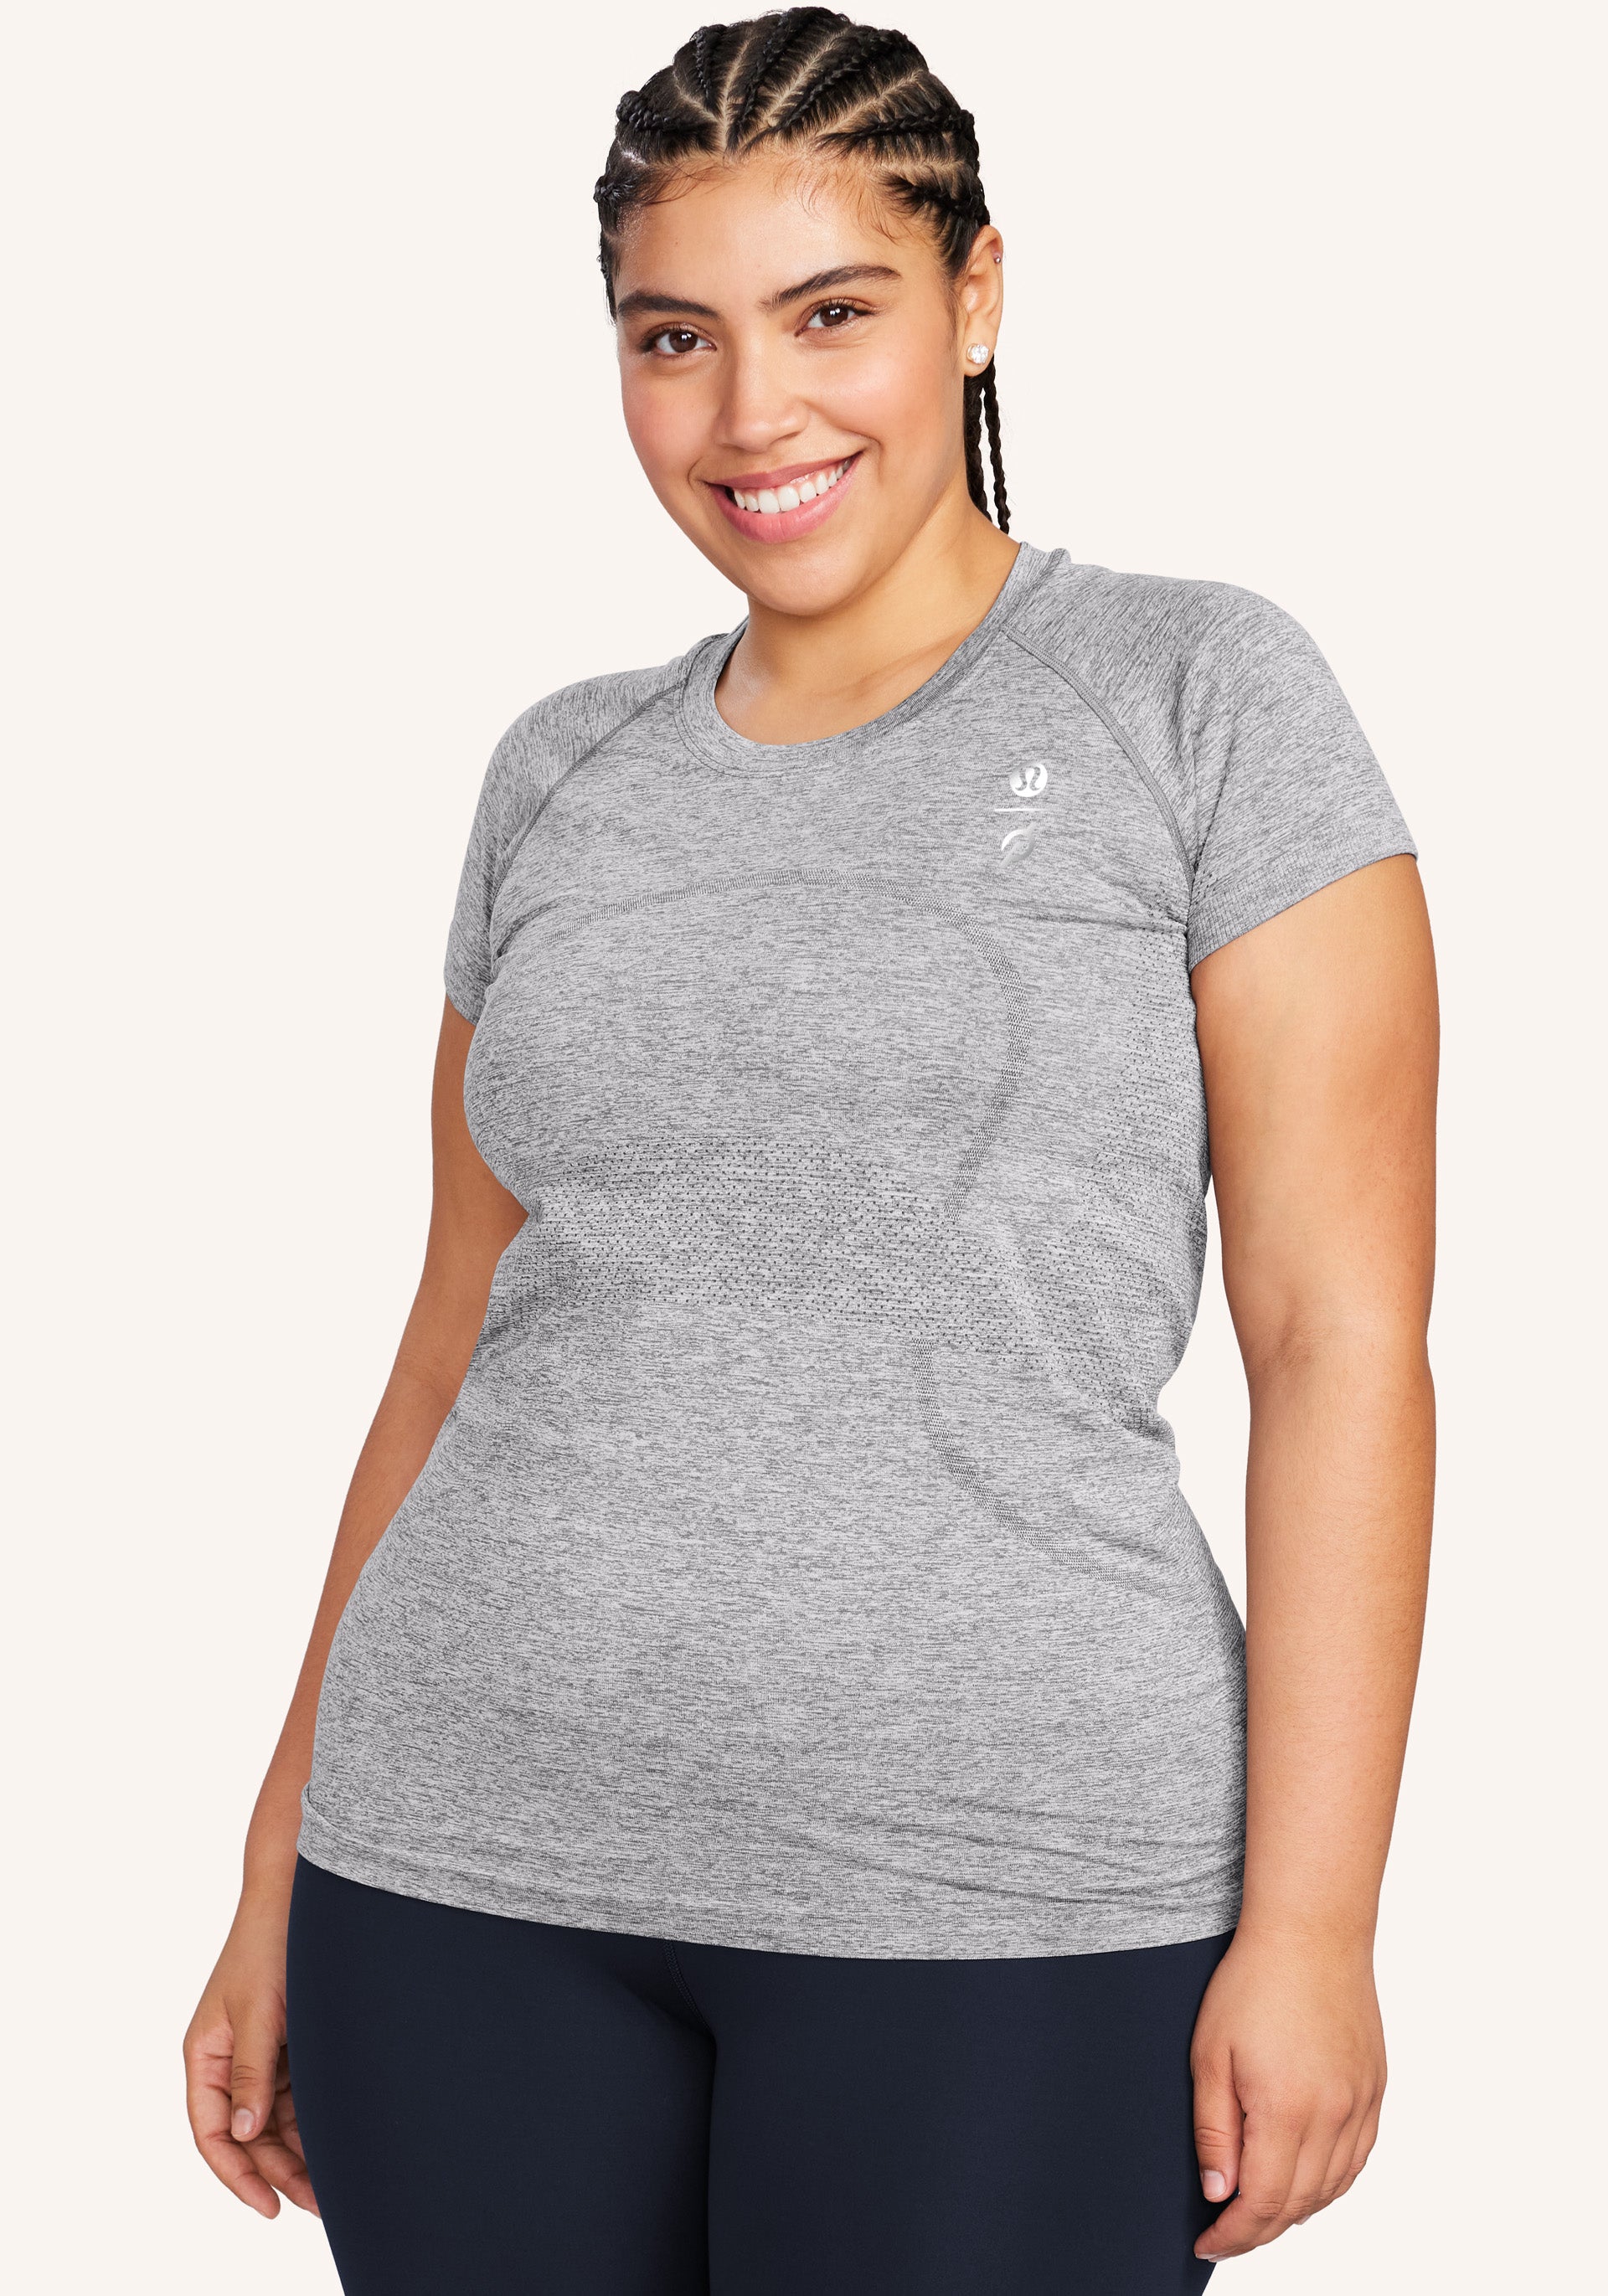 Zelos cropped t-shirt gray size Medium